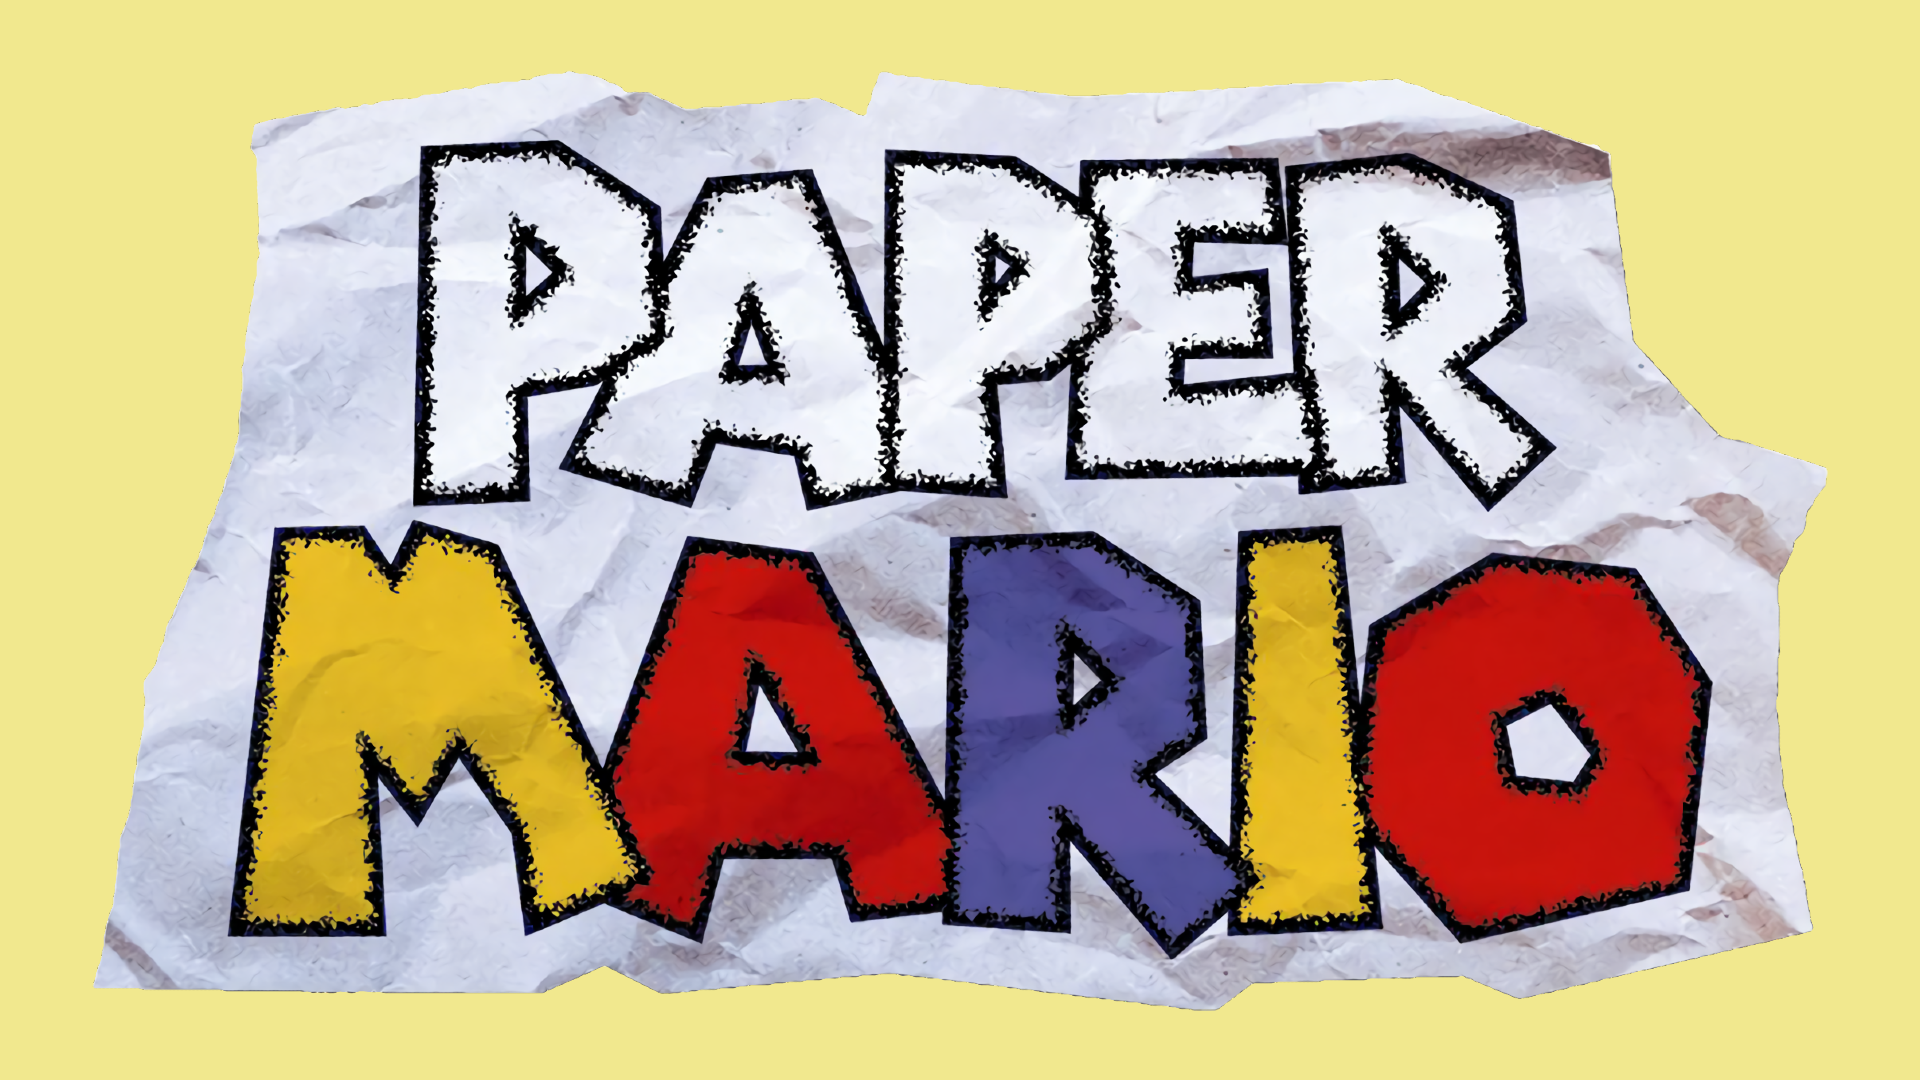 Paper Mario Logo